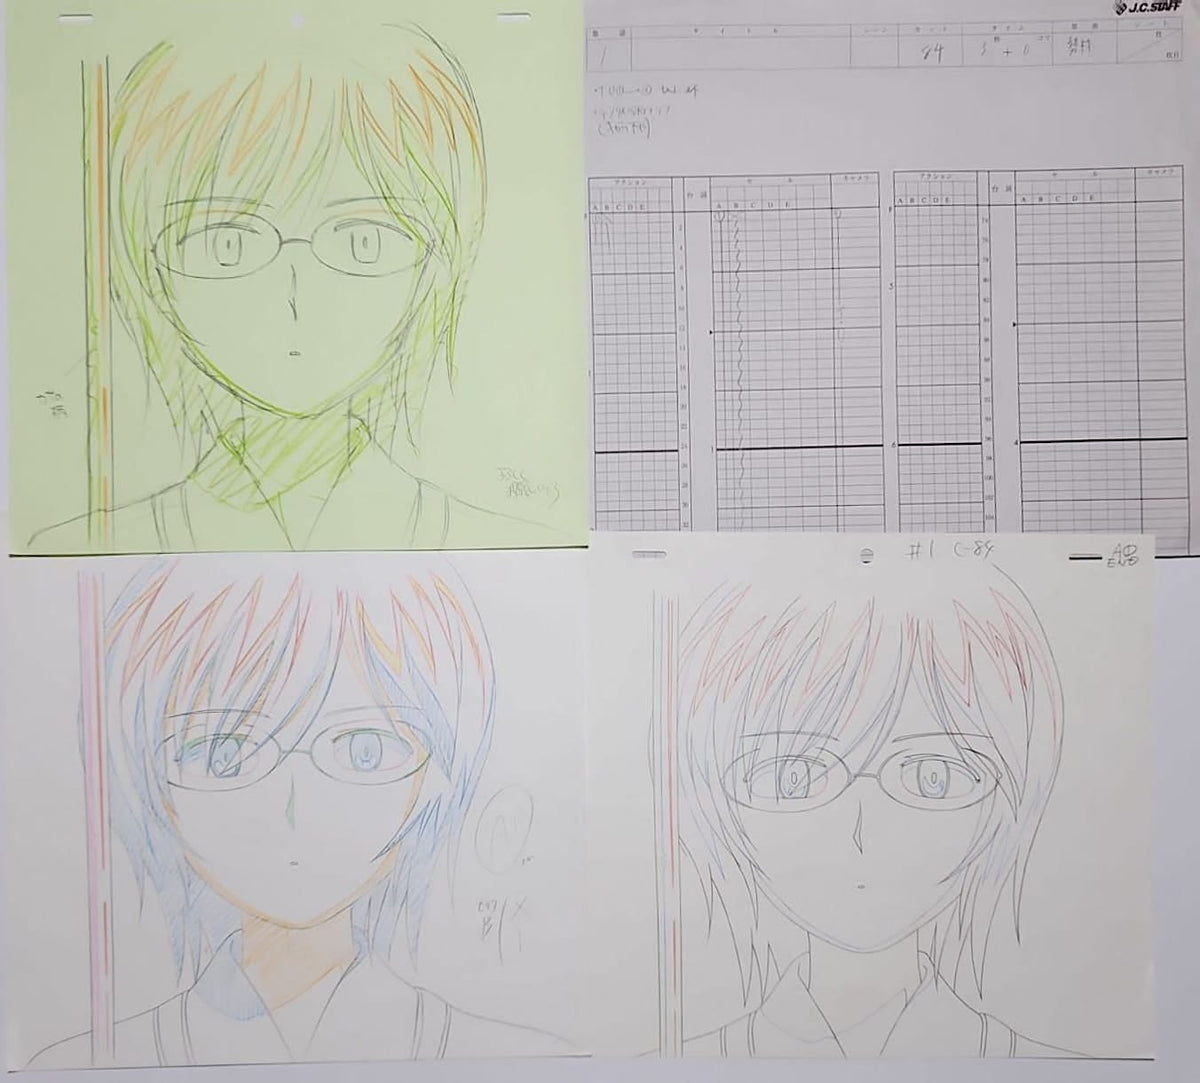 Nanaka 6/17 Animation Production Cel Drawing Anime: 3 Sheets - 4118